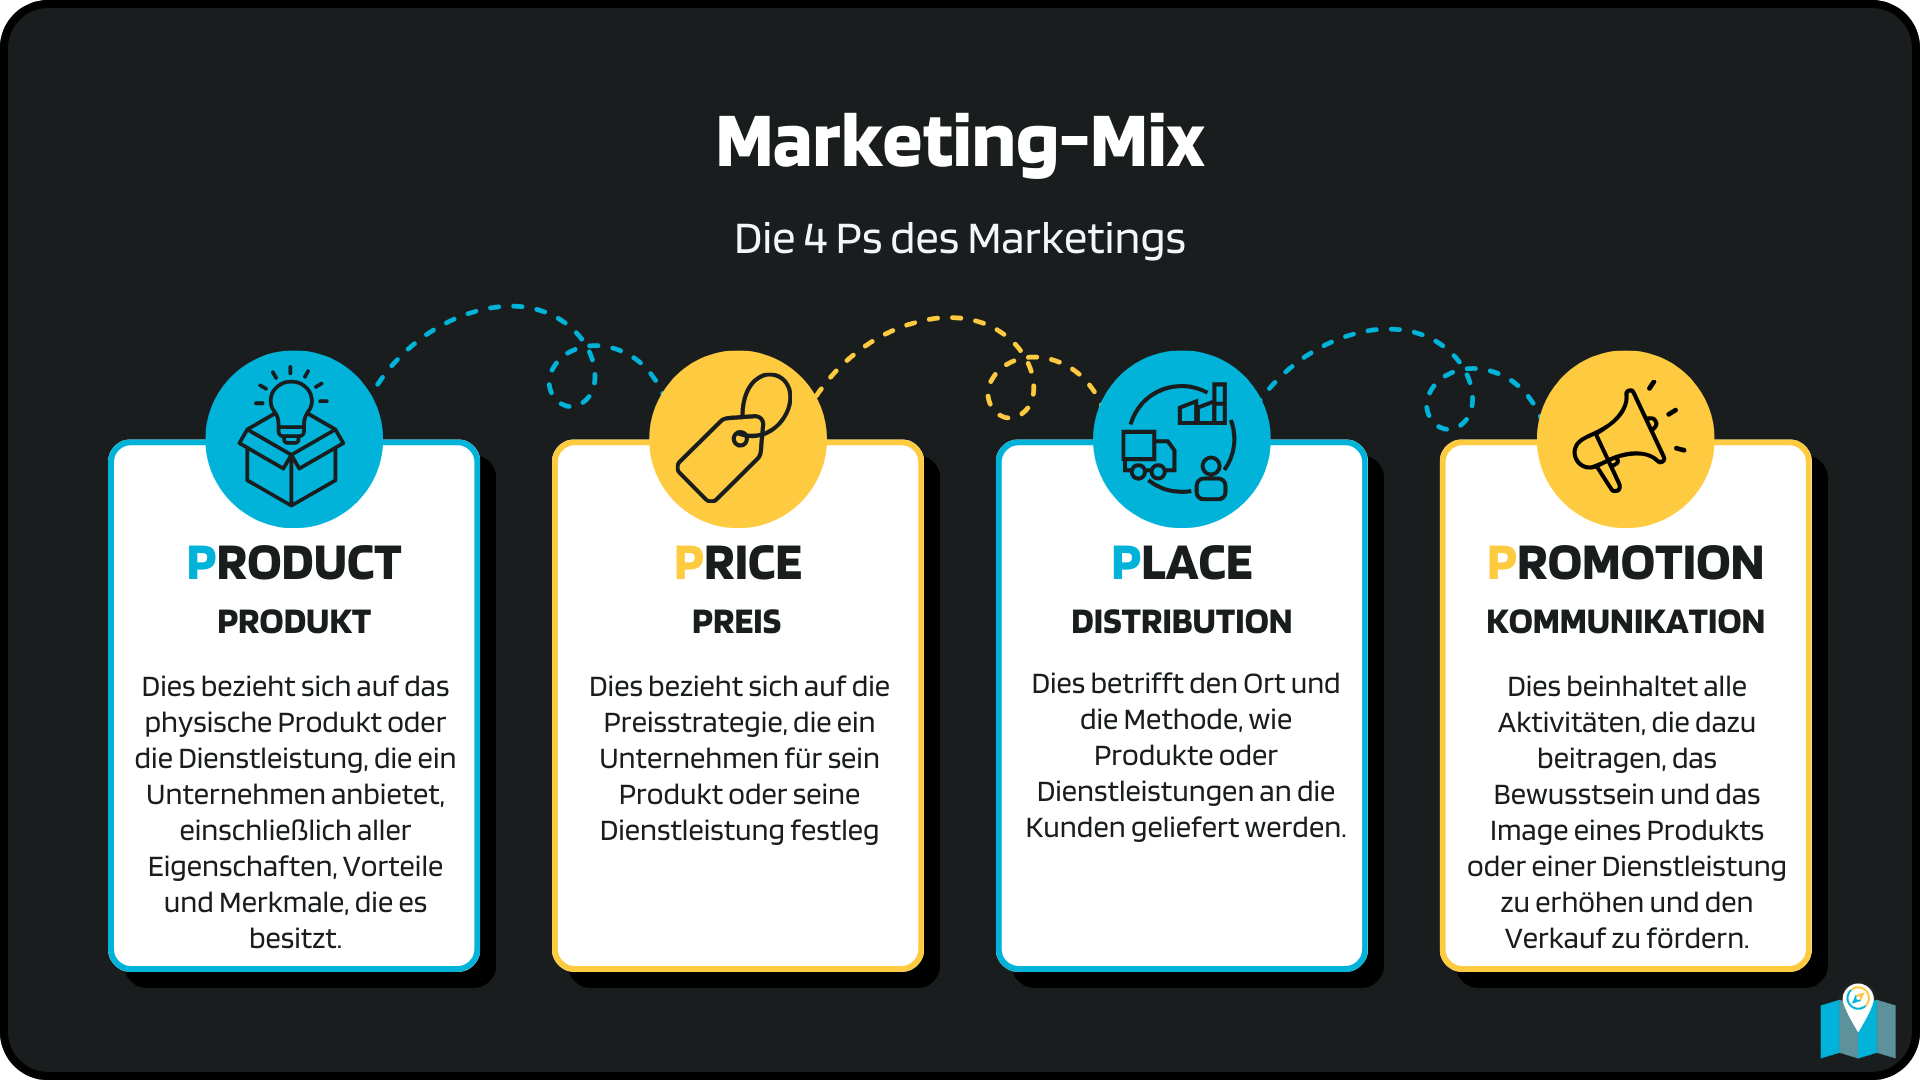 Marketing-Mix, die 4 Ps des Marketings